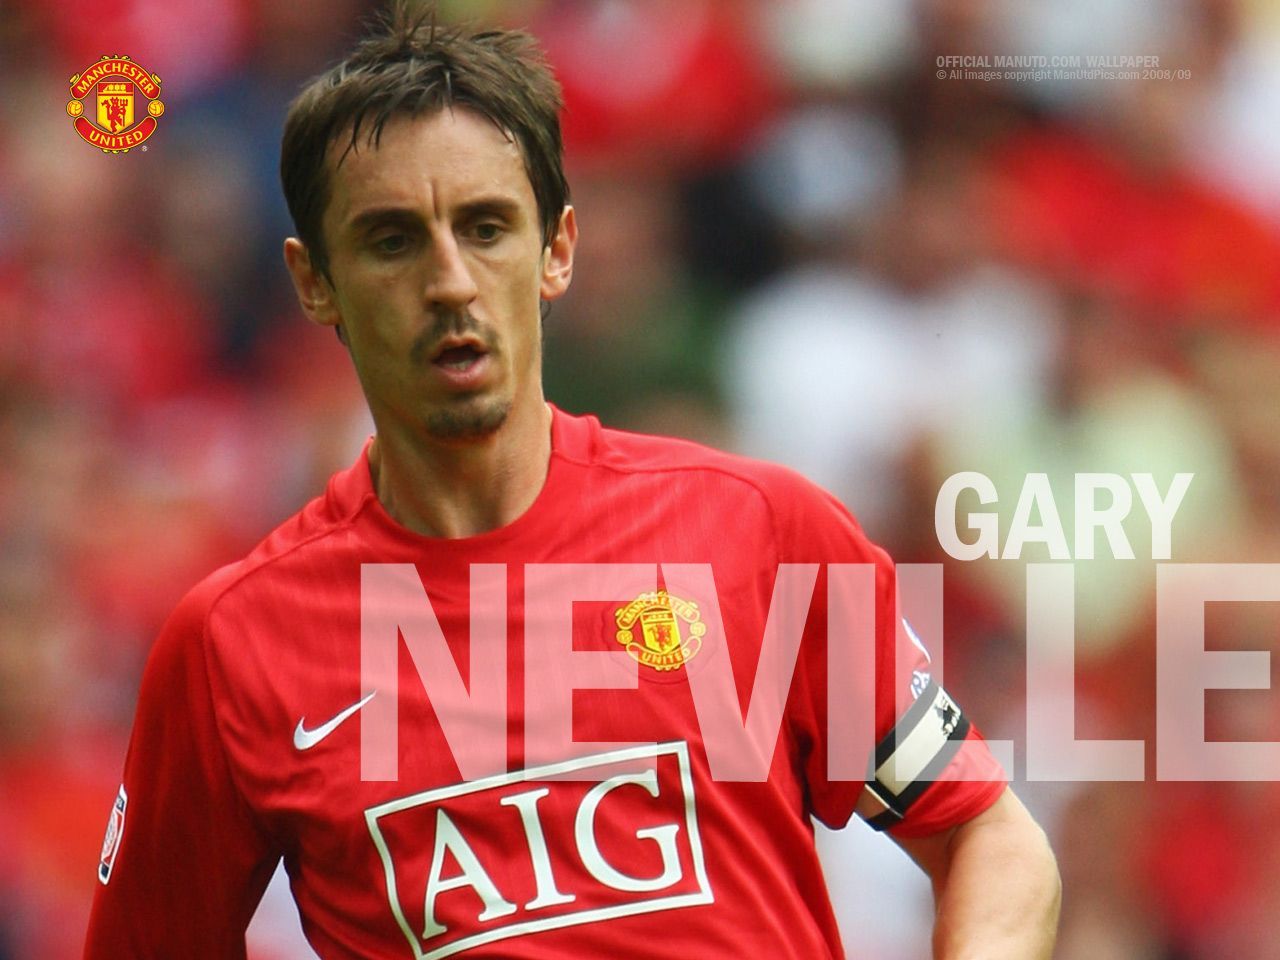 Manchester United Wallpaper >> Gary Neville Wallpaper